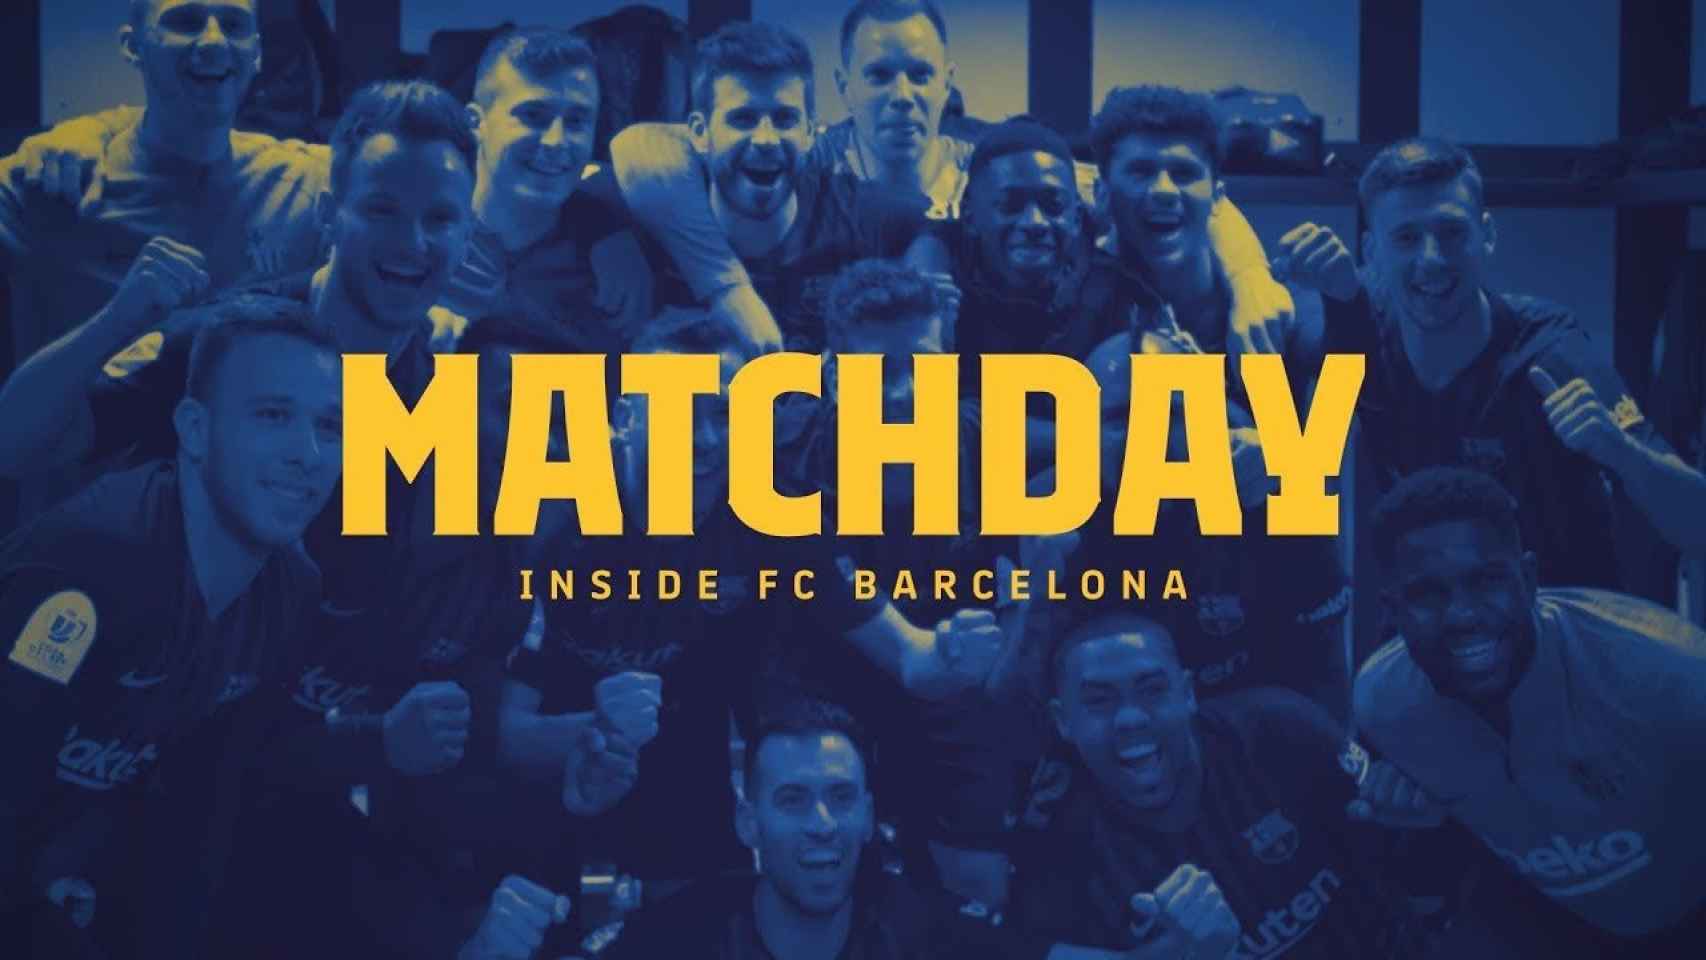 Cartel promocional de Matchday, la serie del Barça / Rakuten TV